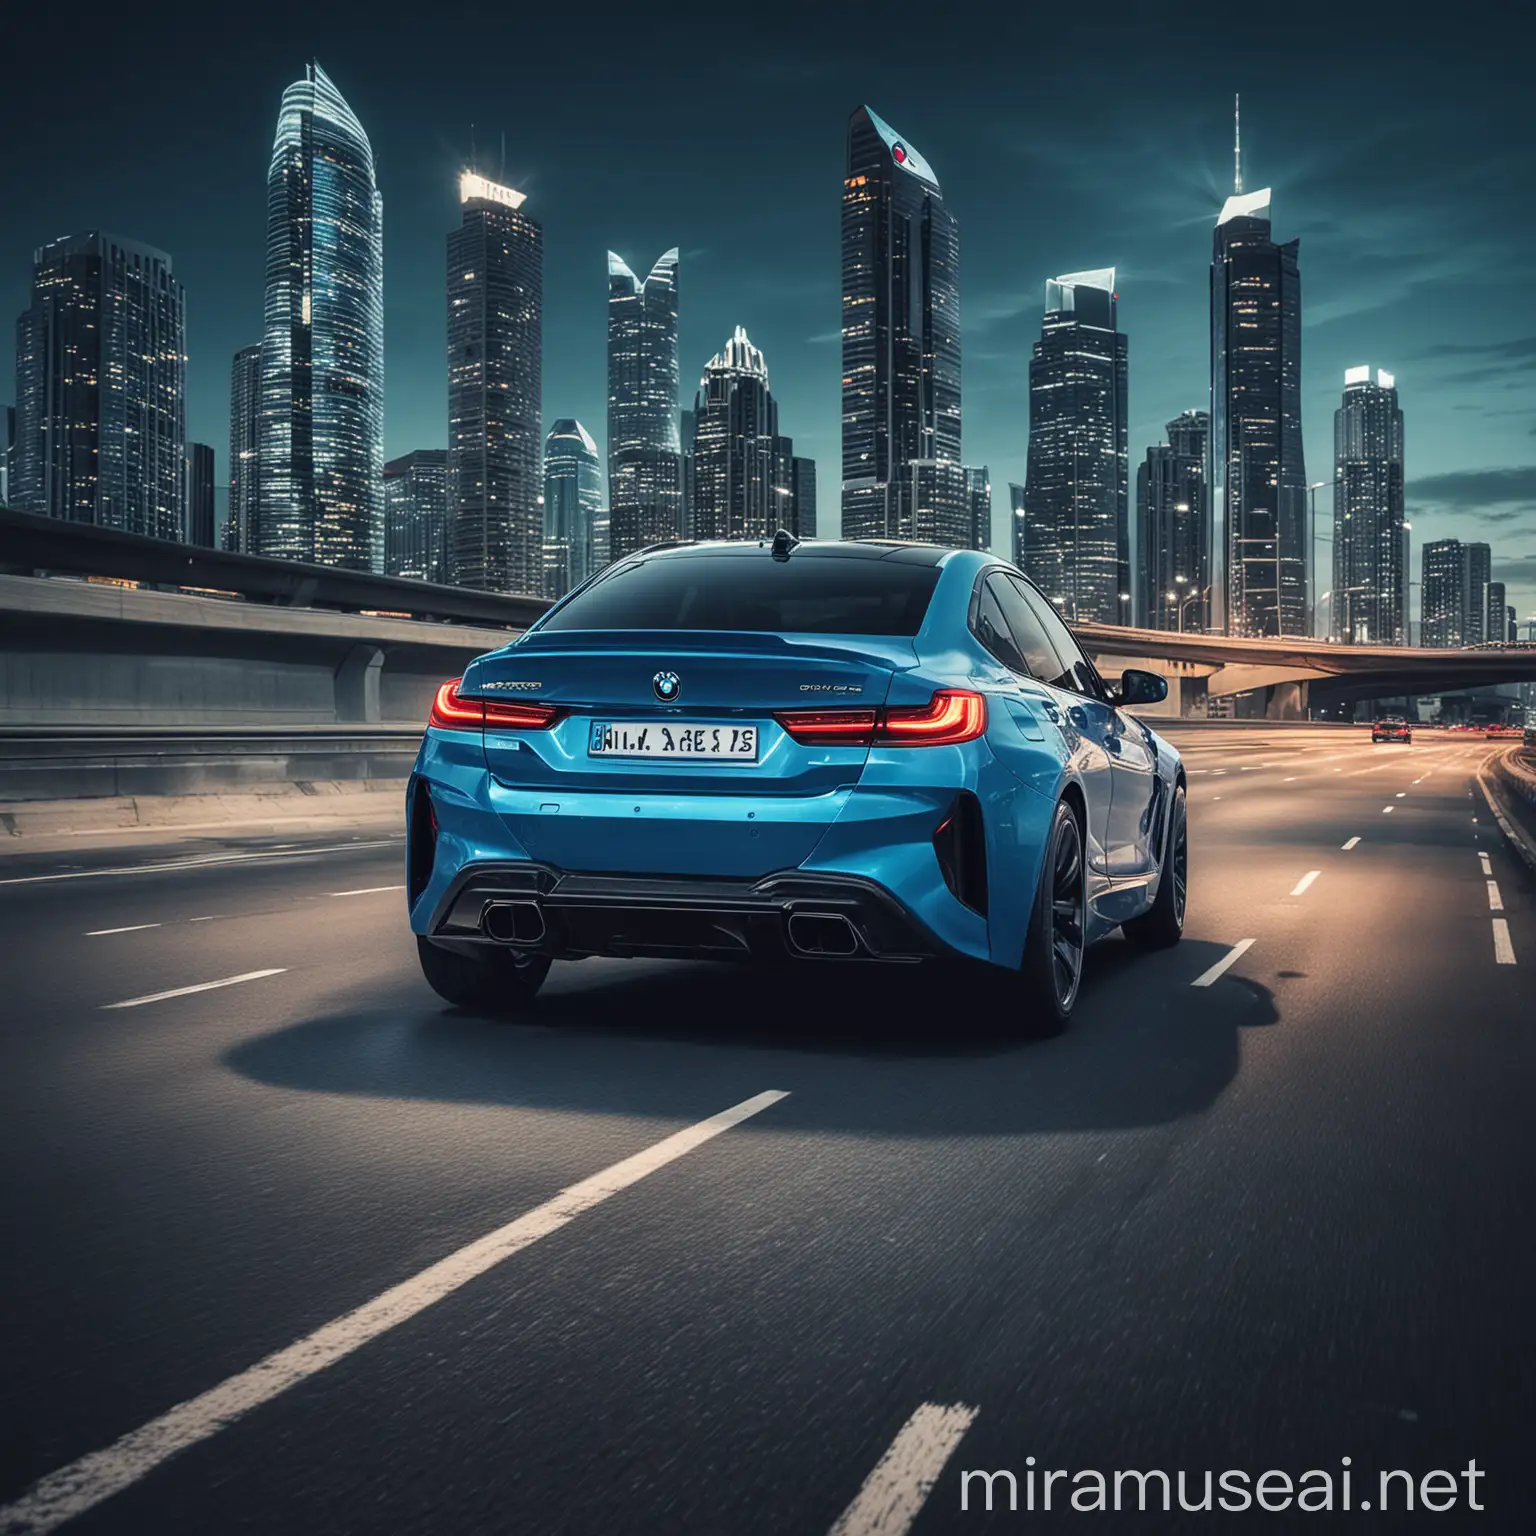 Futuristic BMW Car Speeding on Urban Highway with Blue Illumination